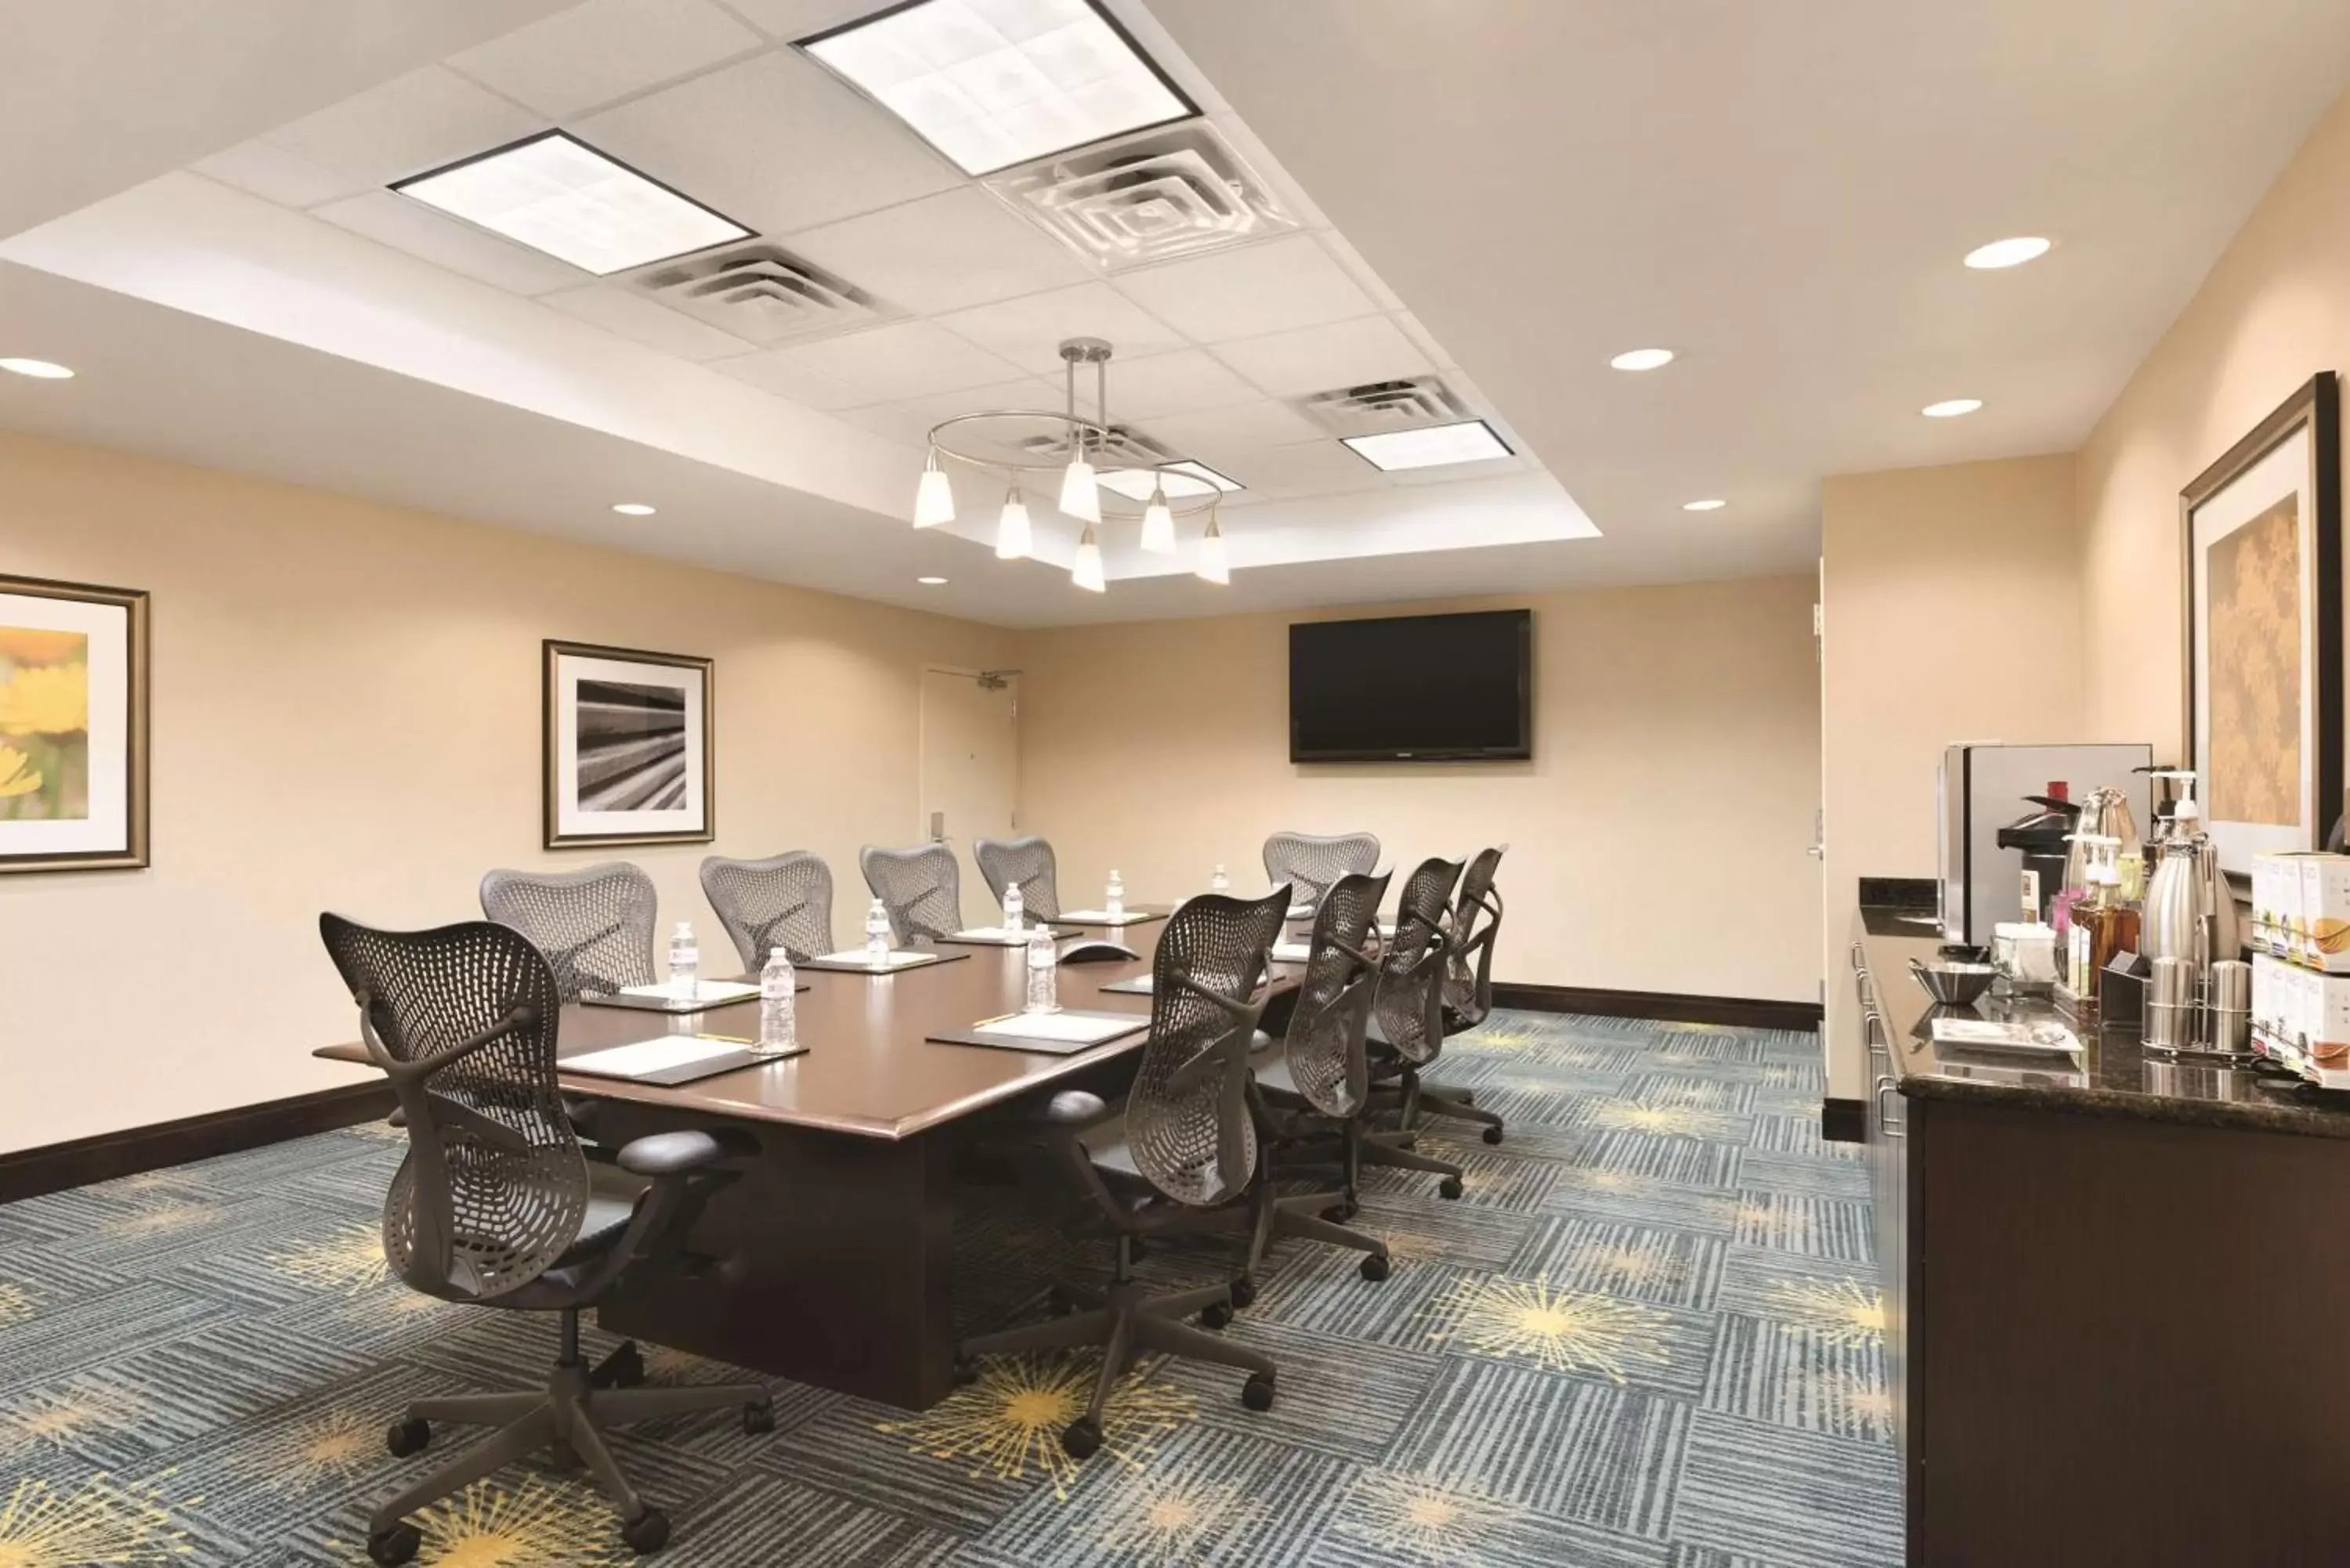 Meeting/conference room in Hilton Garden Inn Fargo